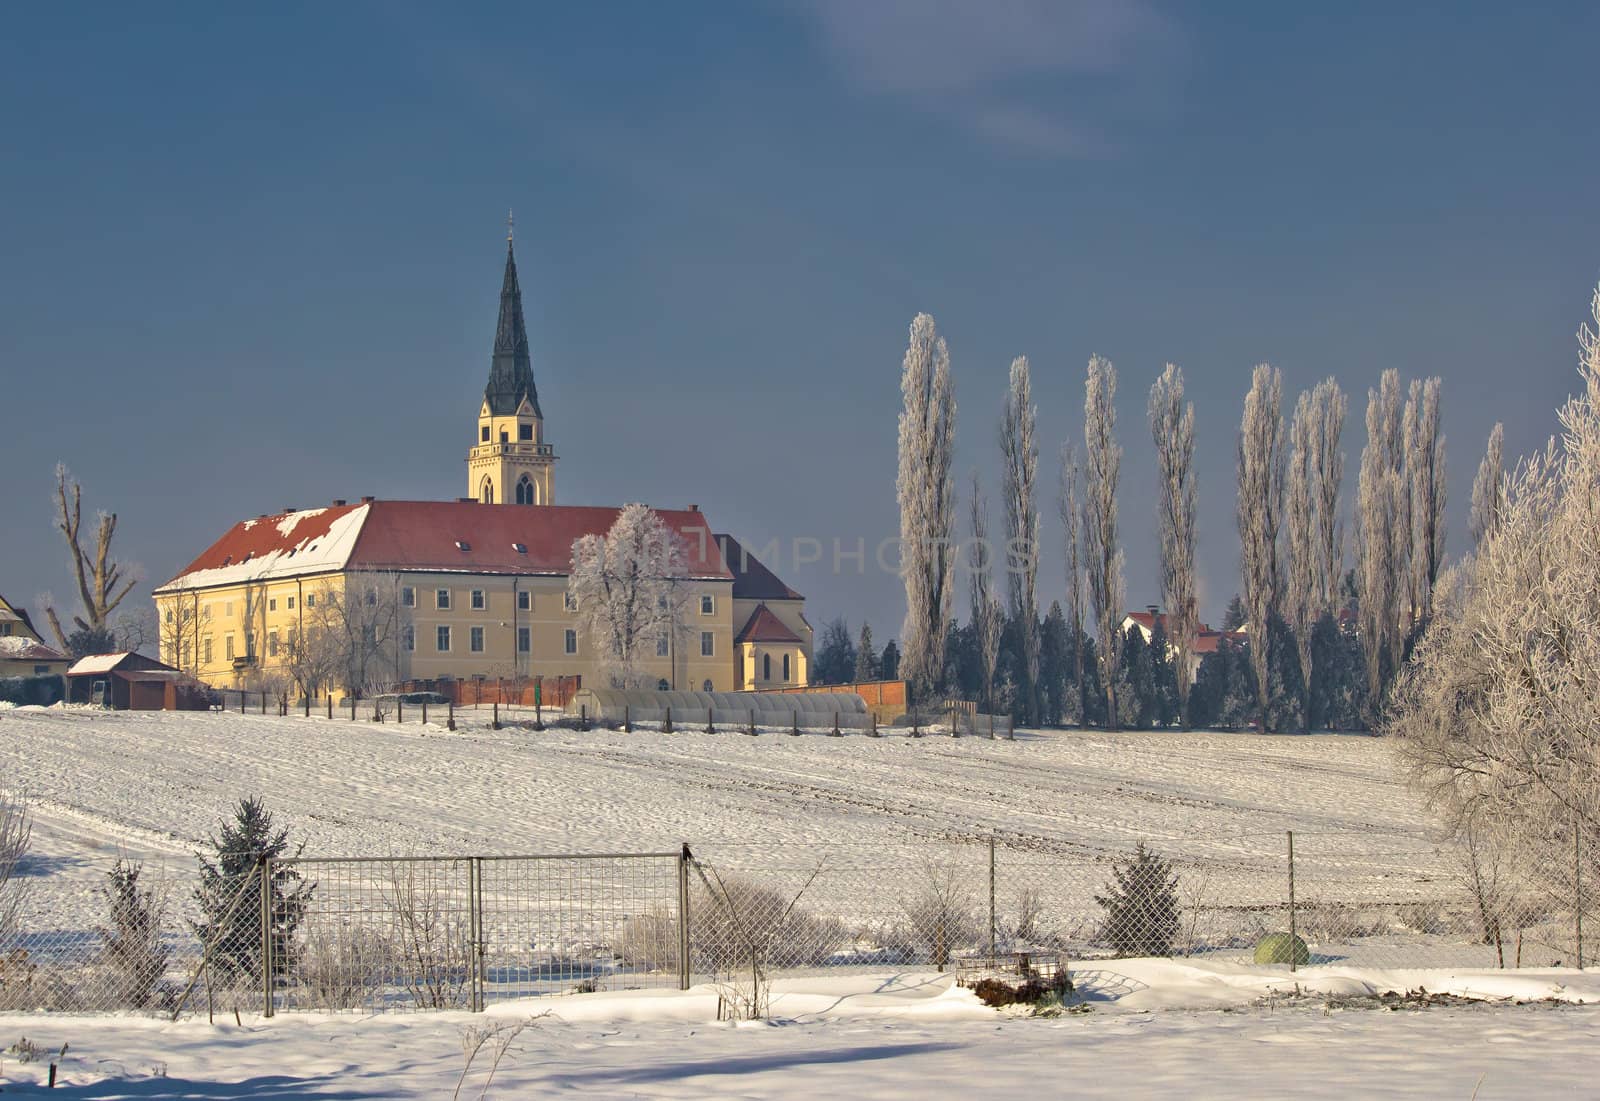 Greek catholic cathedral in snow landscape, Krizevci, Croatia